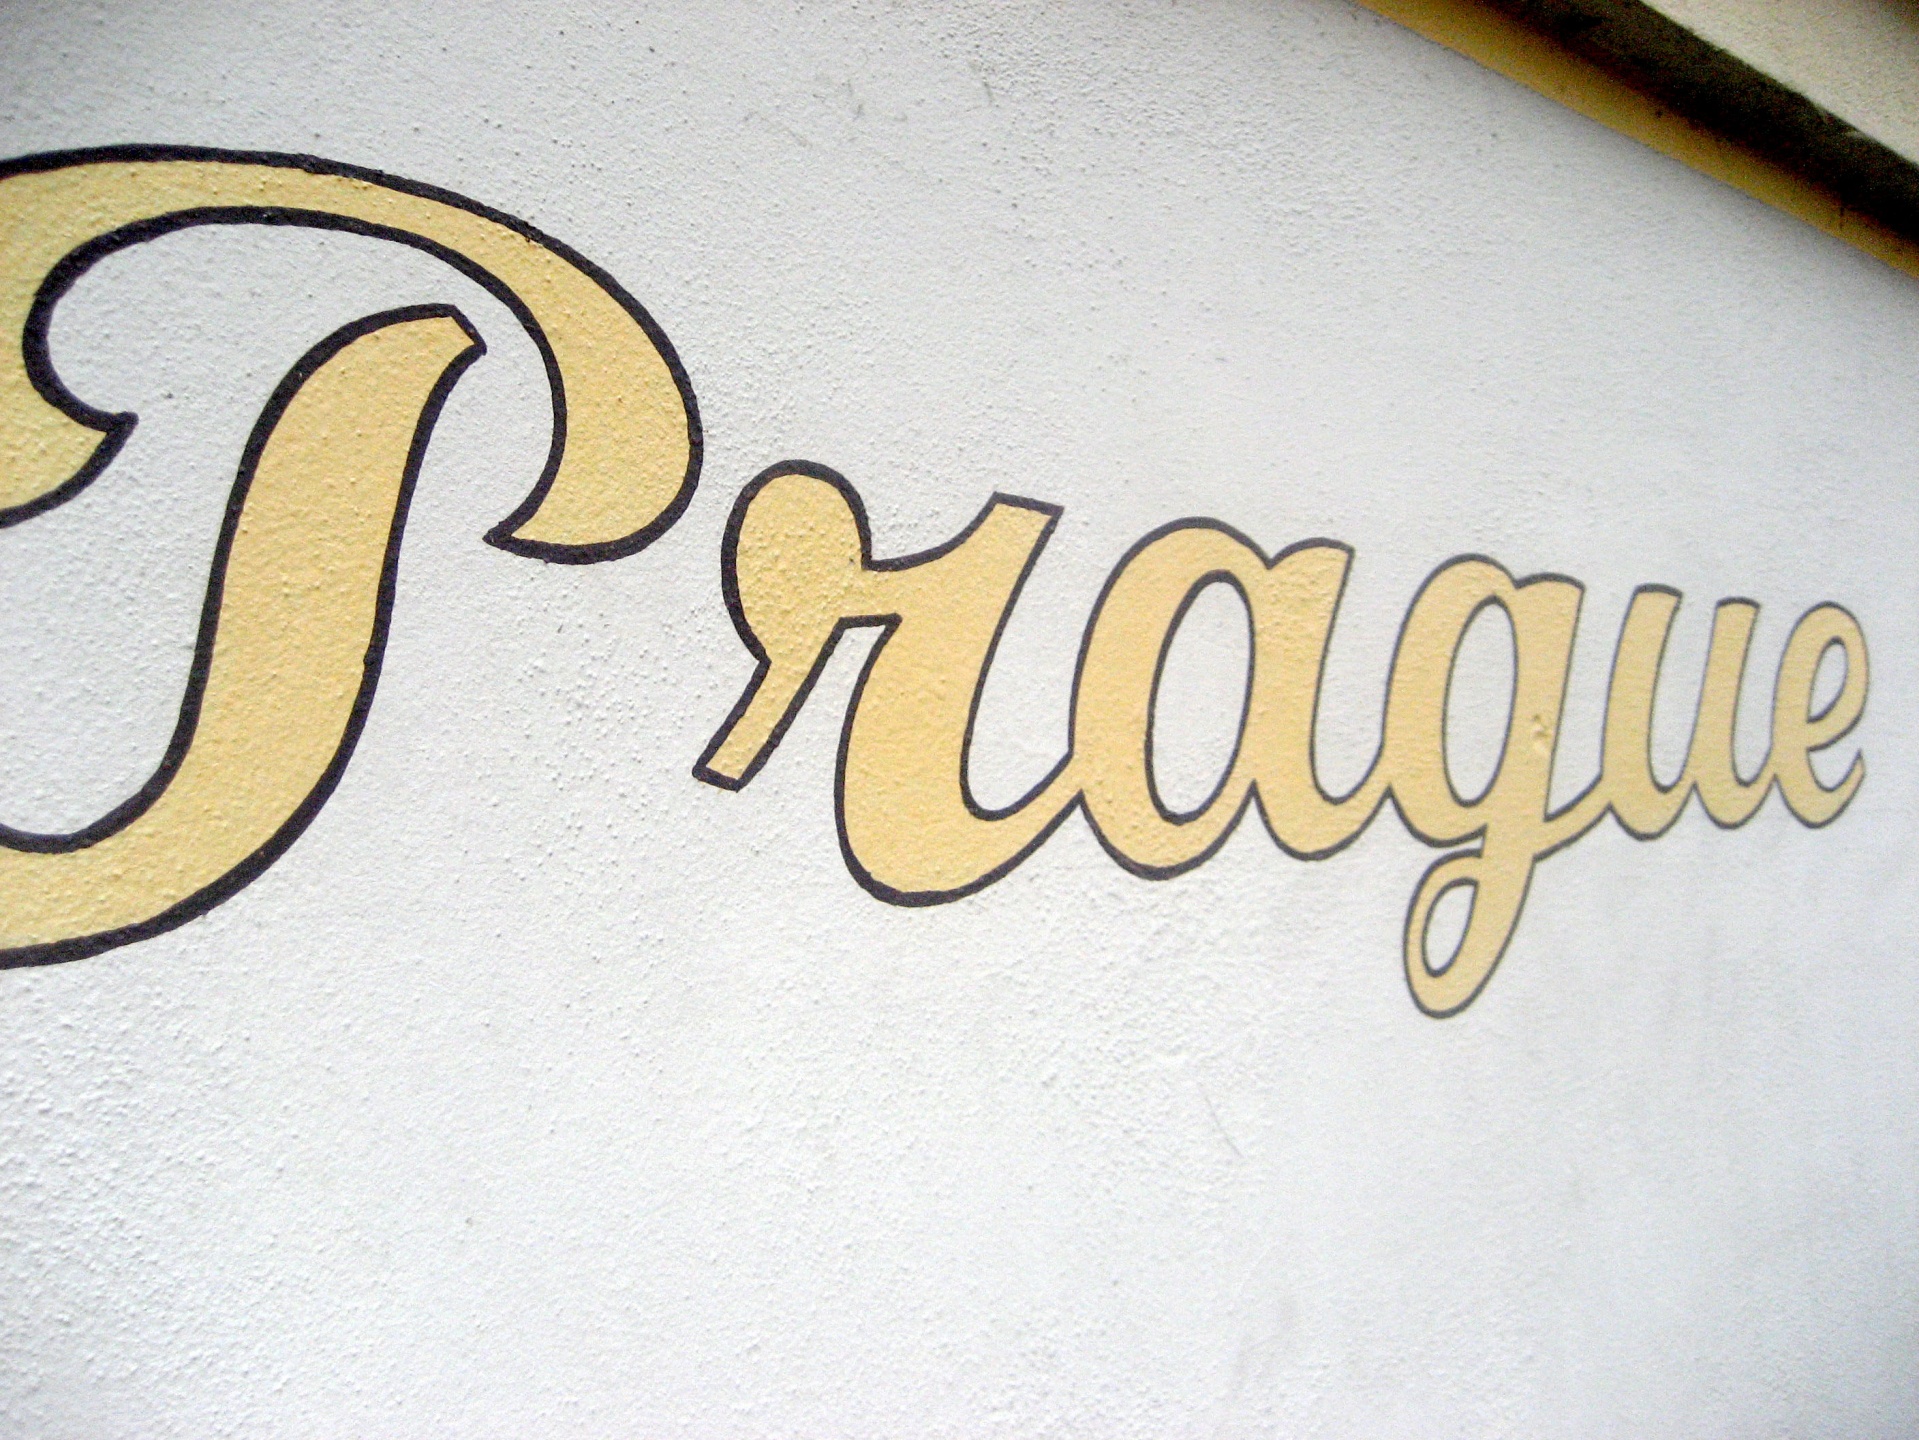 prague czech republic sign free photo